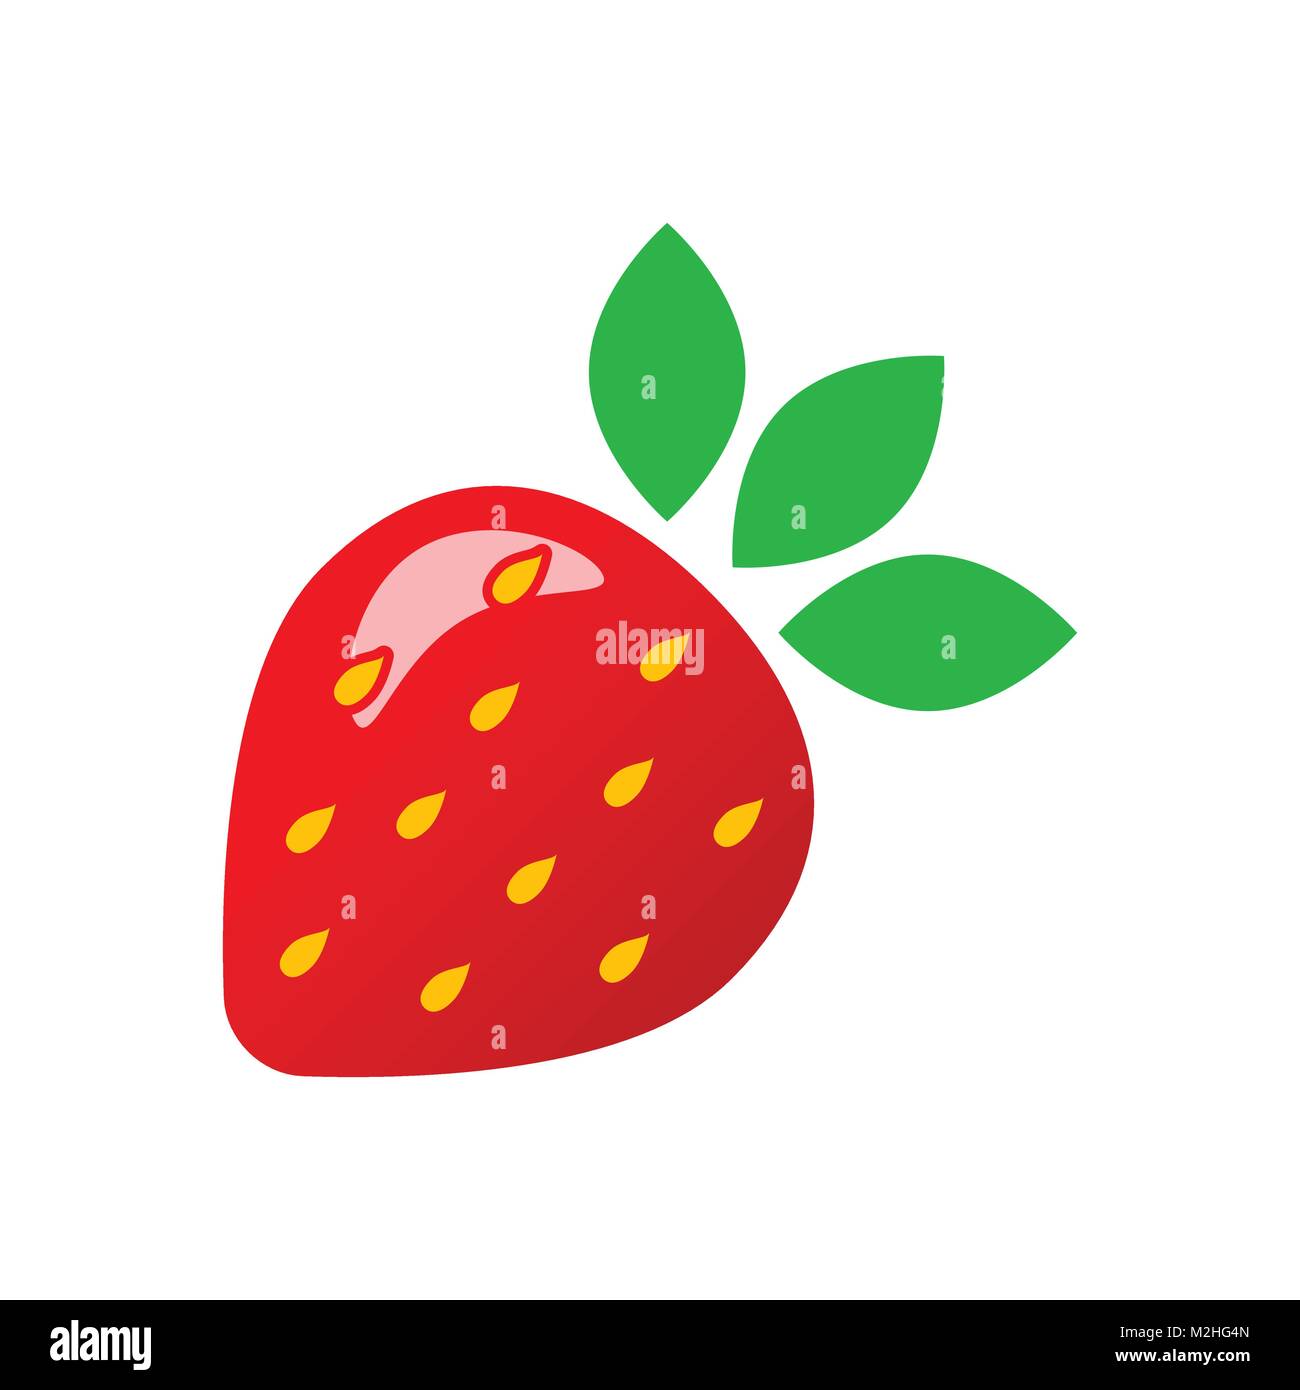 https://c8.alamy.com/comp/M2HG4N/strawberry-fruit-sign-vector-icon-ripe-berry-illustration-business-M2HG4N.jpg